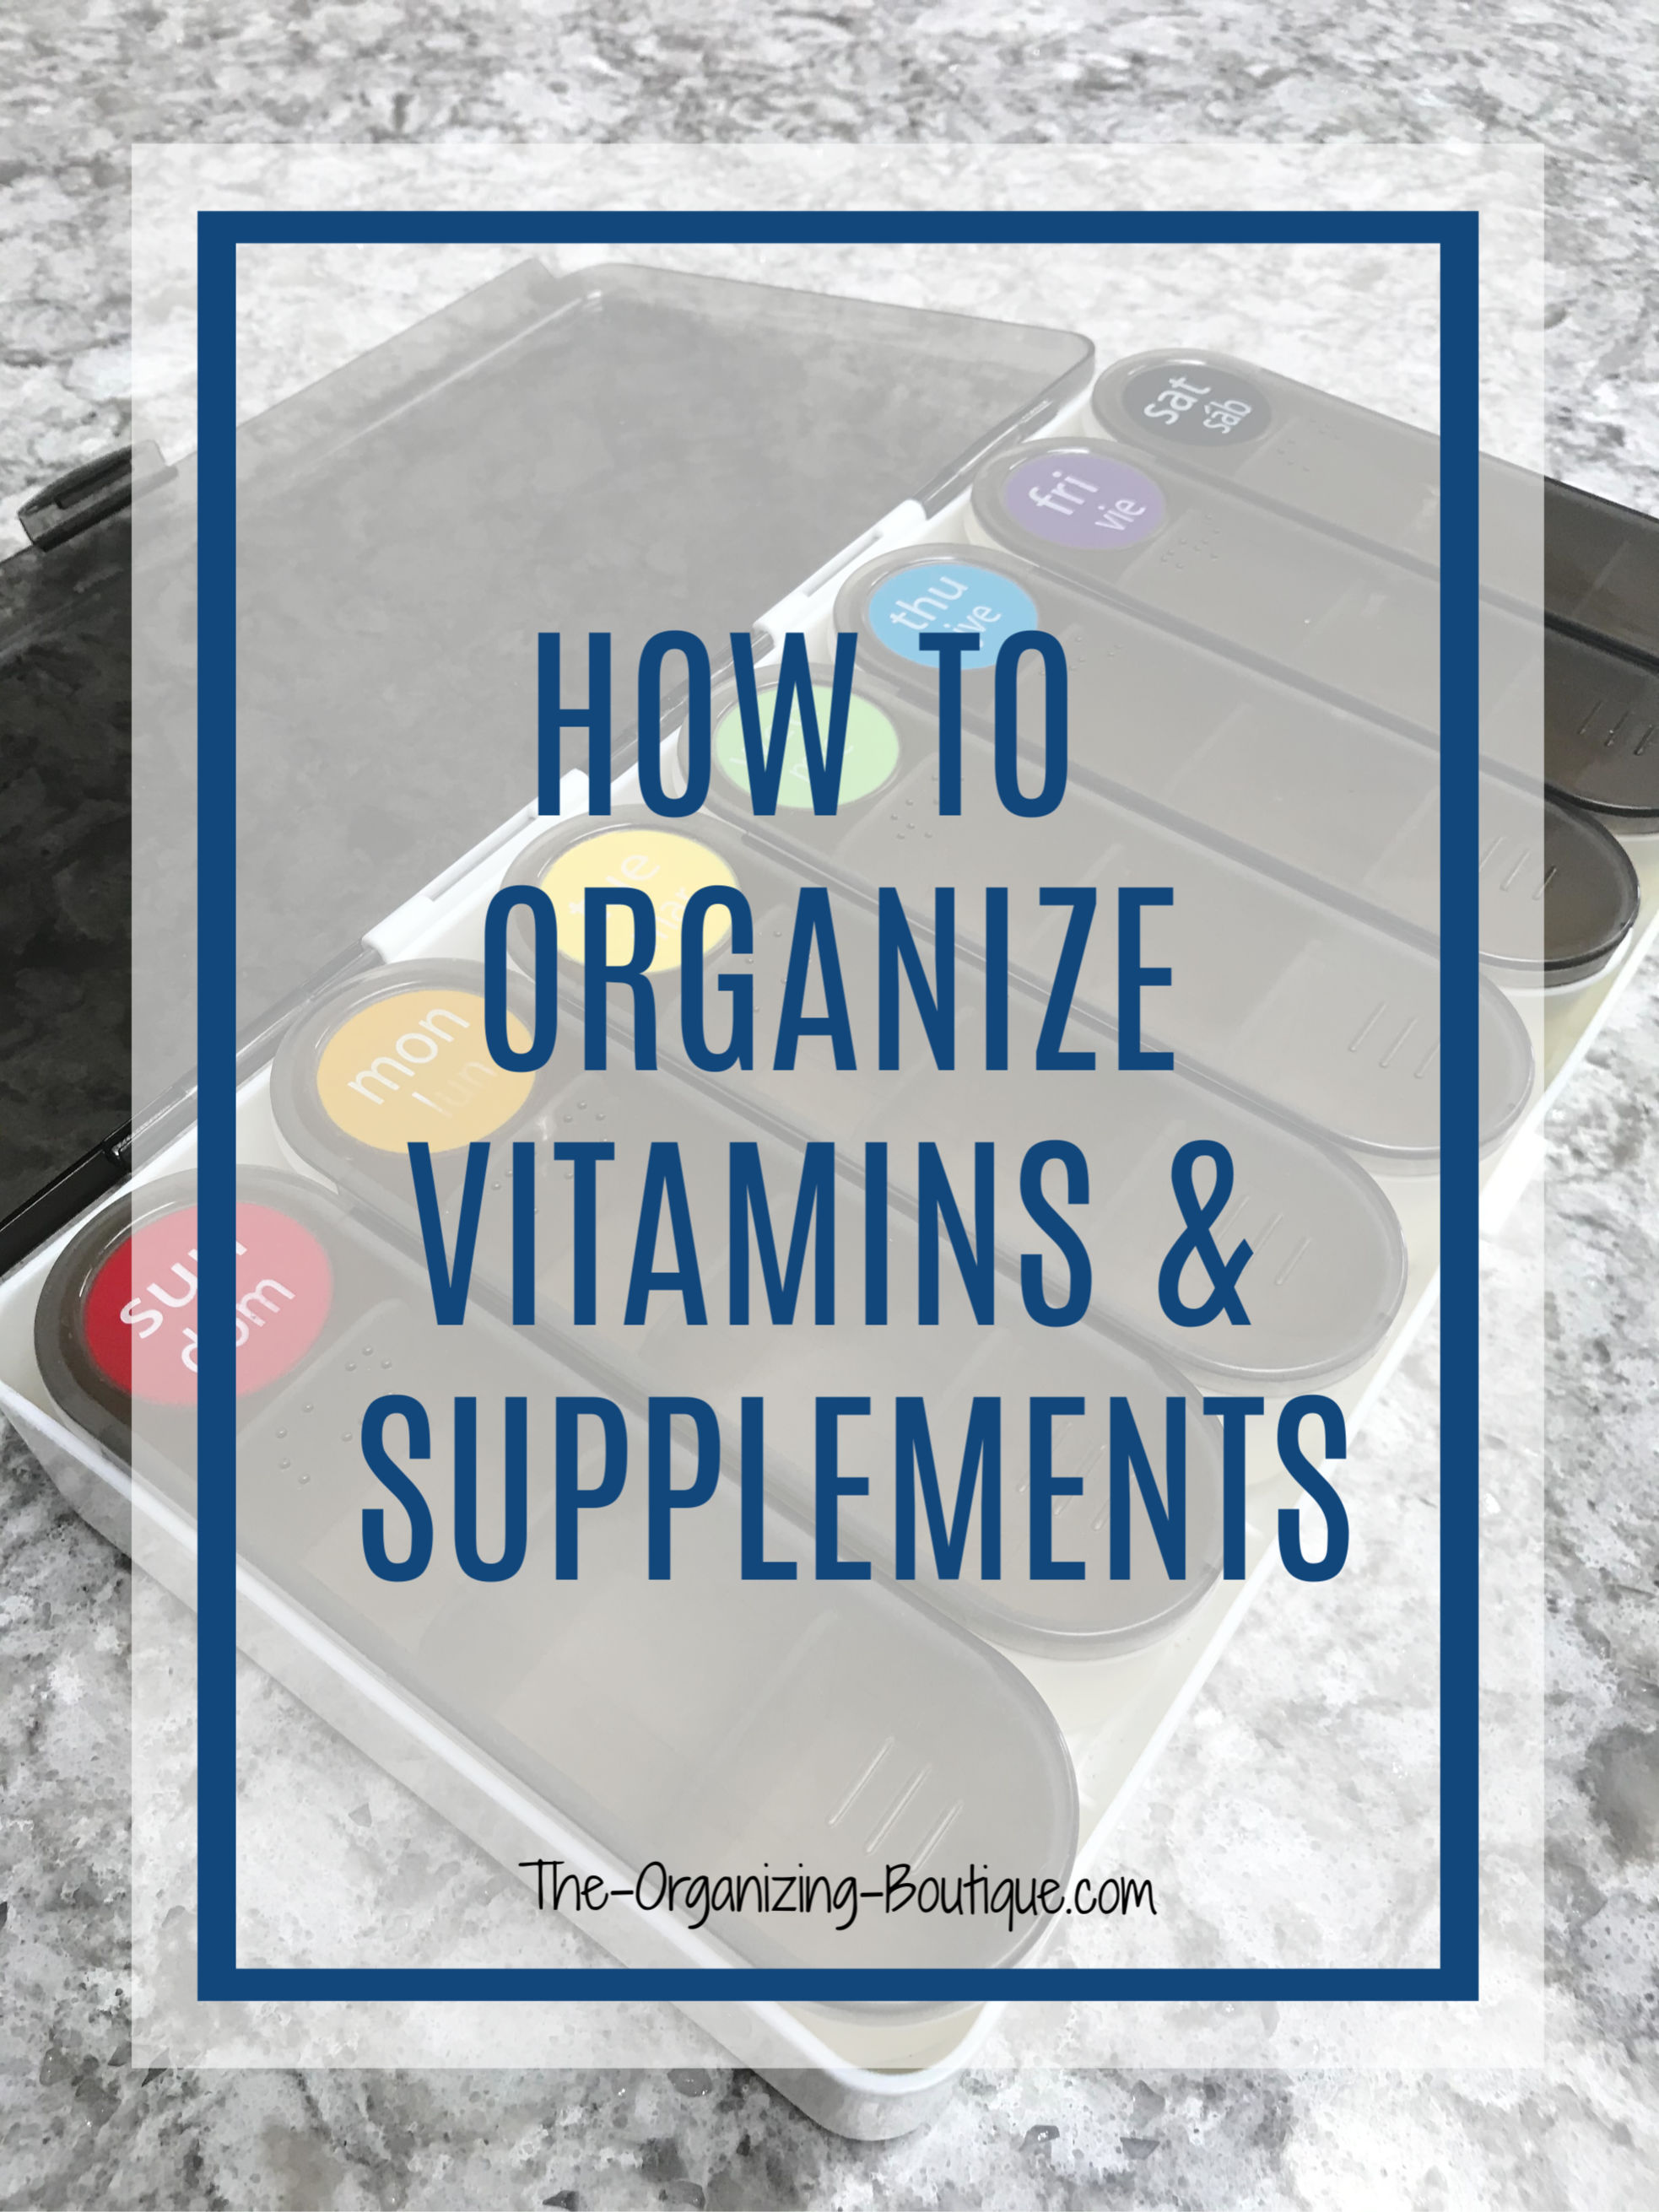 Medicine & Vitamin organization